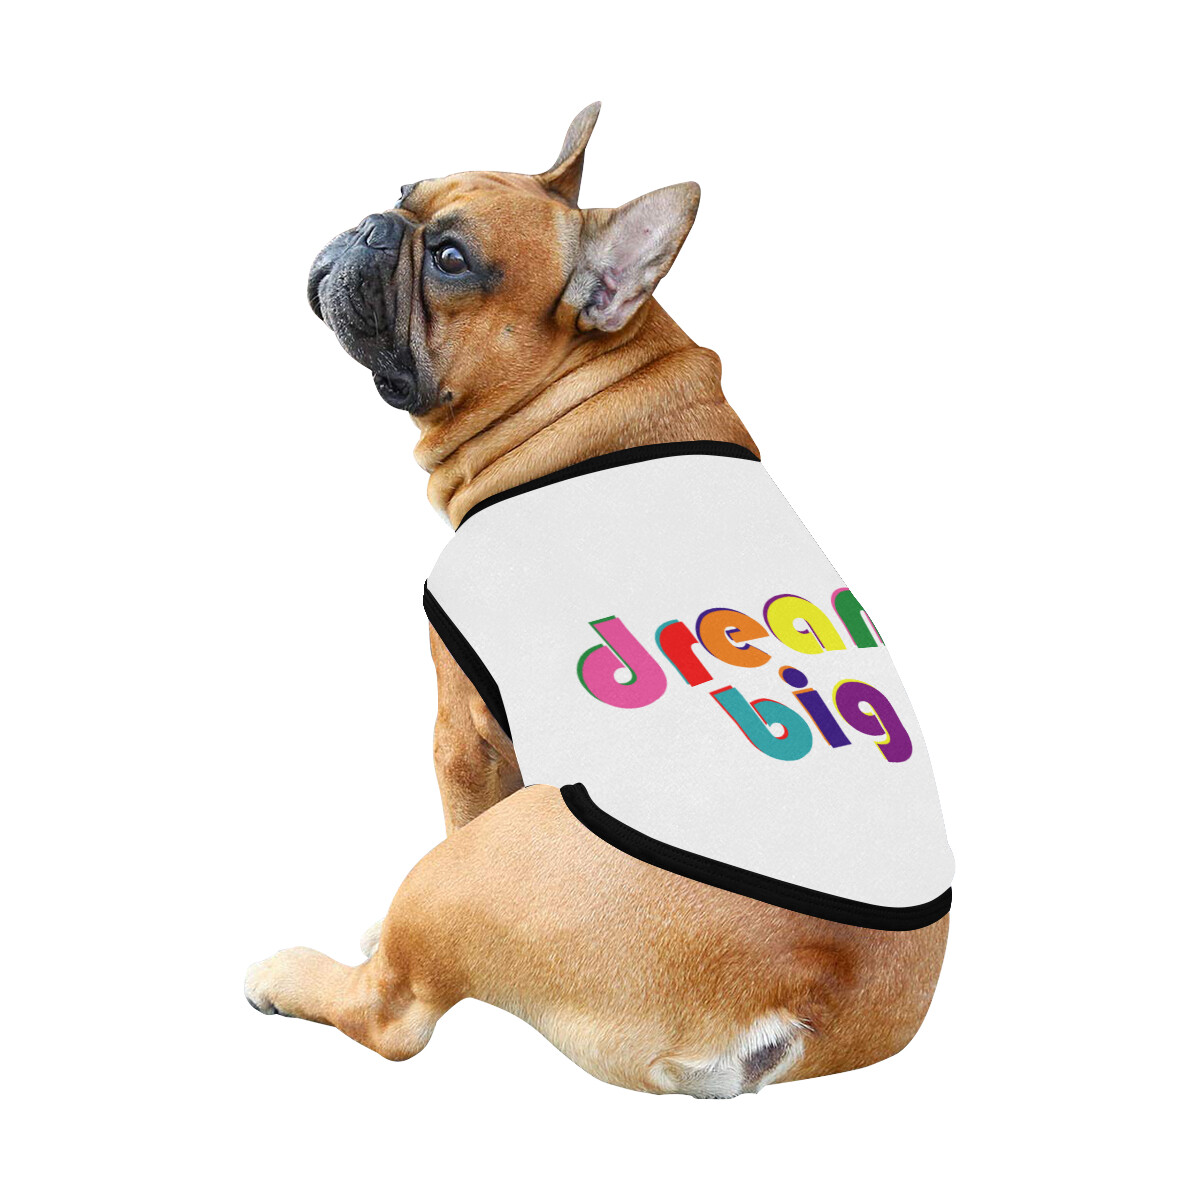 🐕 Dream Big Dog shirt Dog Tank Top, Dog t-shirt, Dog clothes, Gifts, front back print, 7 sizes XS to 3XL, dog gifts, white